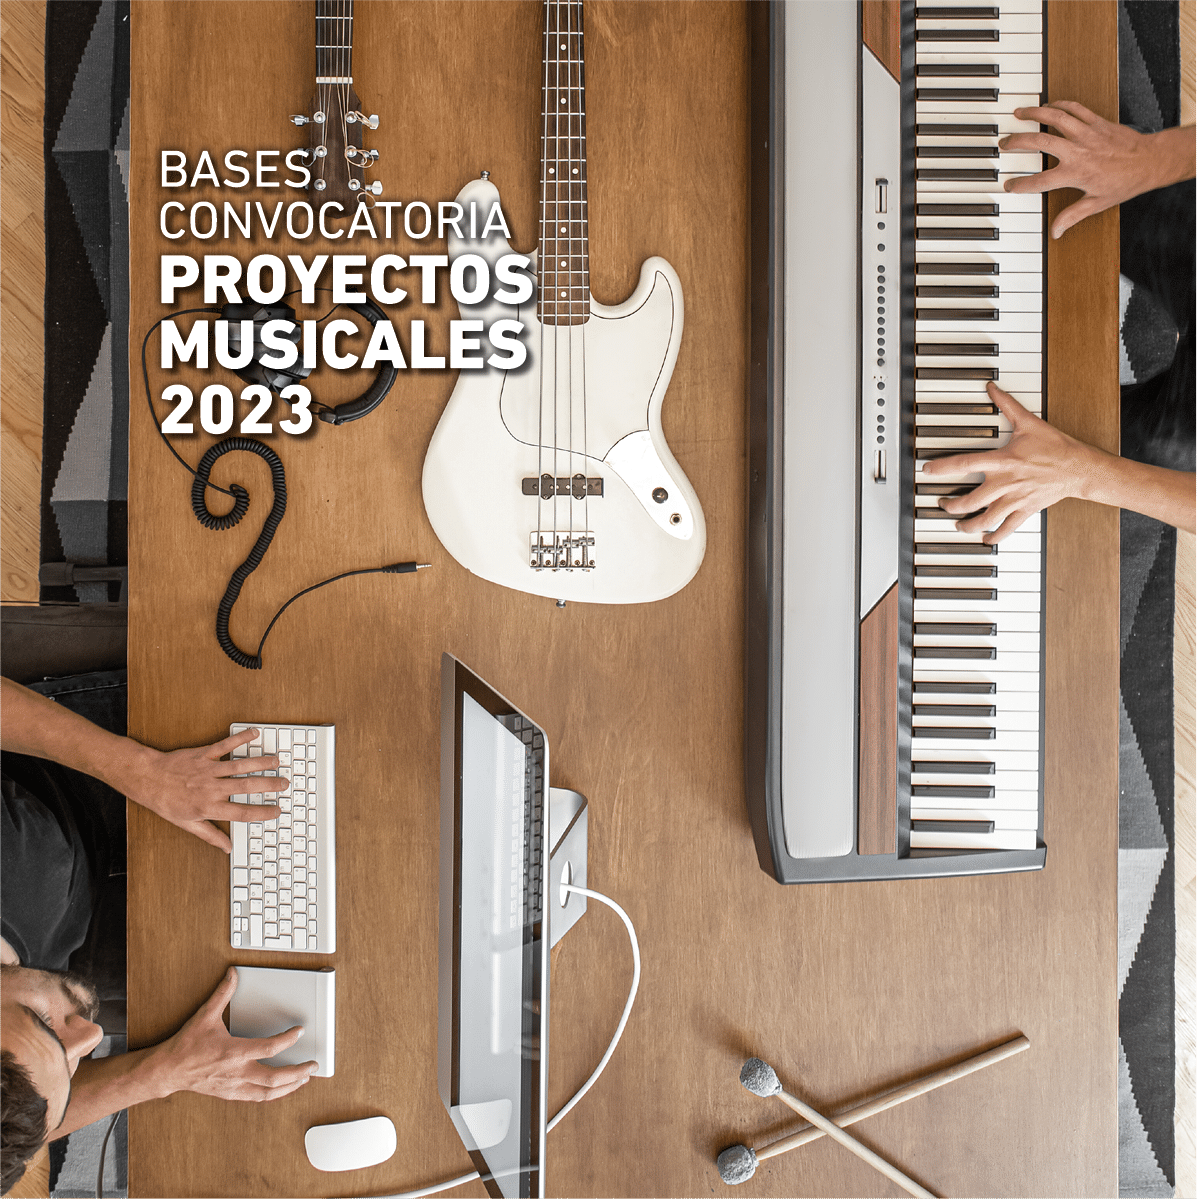 Convocatoria Proyectos musicales 2022